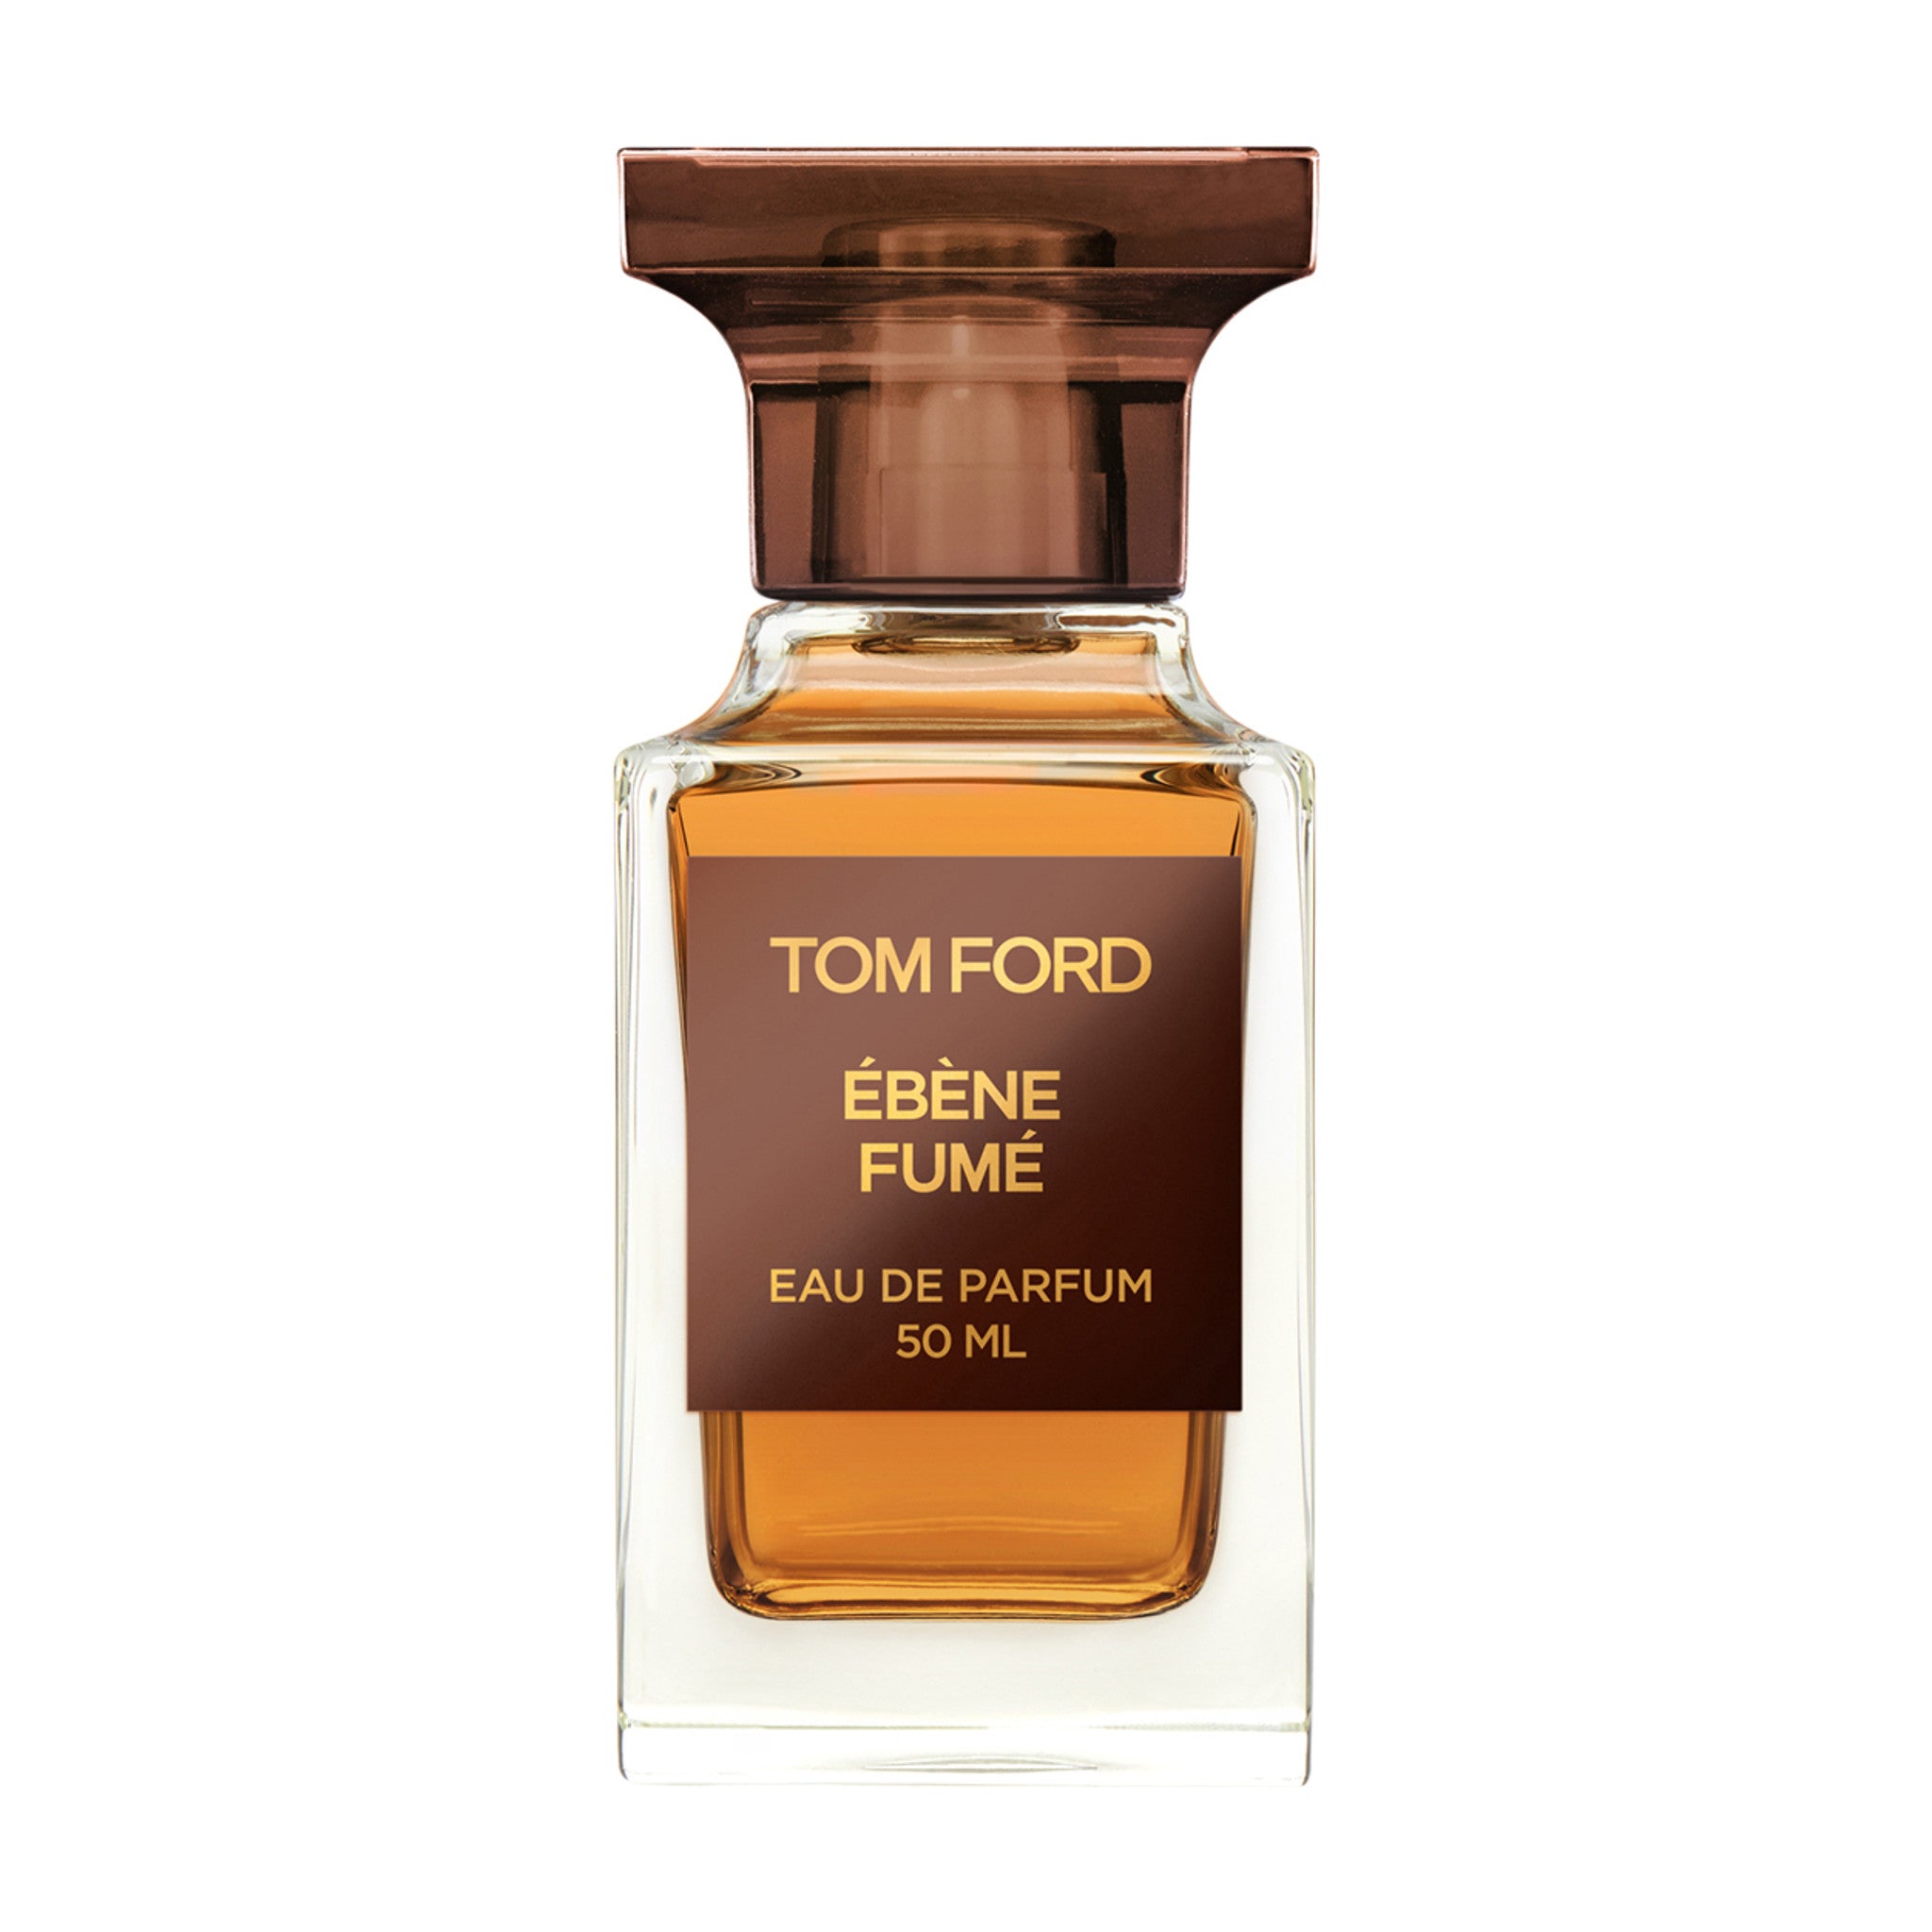 Perbel Golden Dream Eau de Parfum Spray 1.7oz/50ml in Box